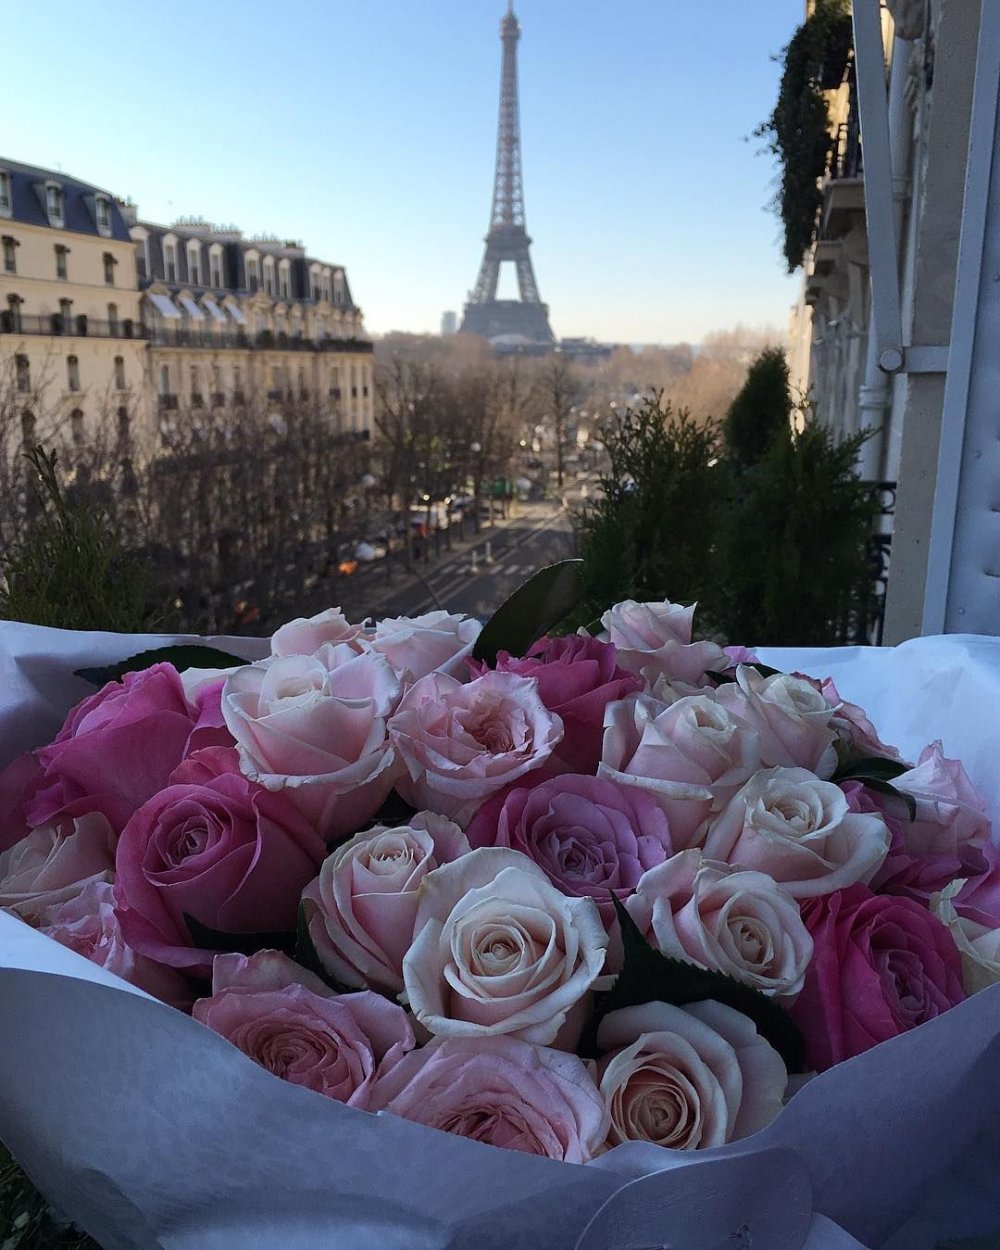 Париж в цветах